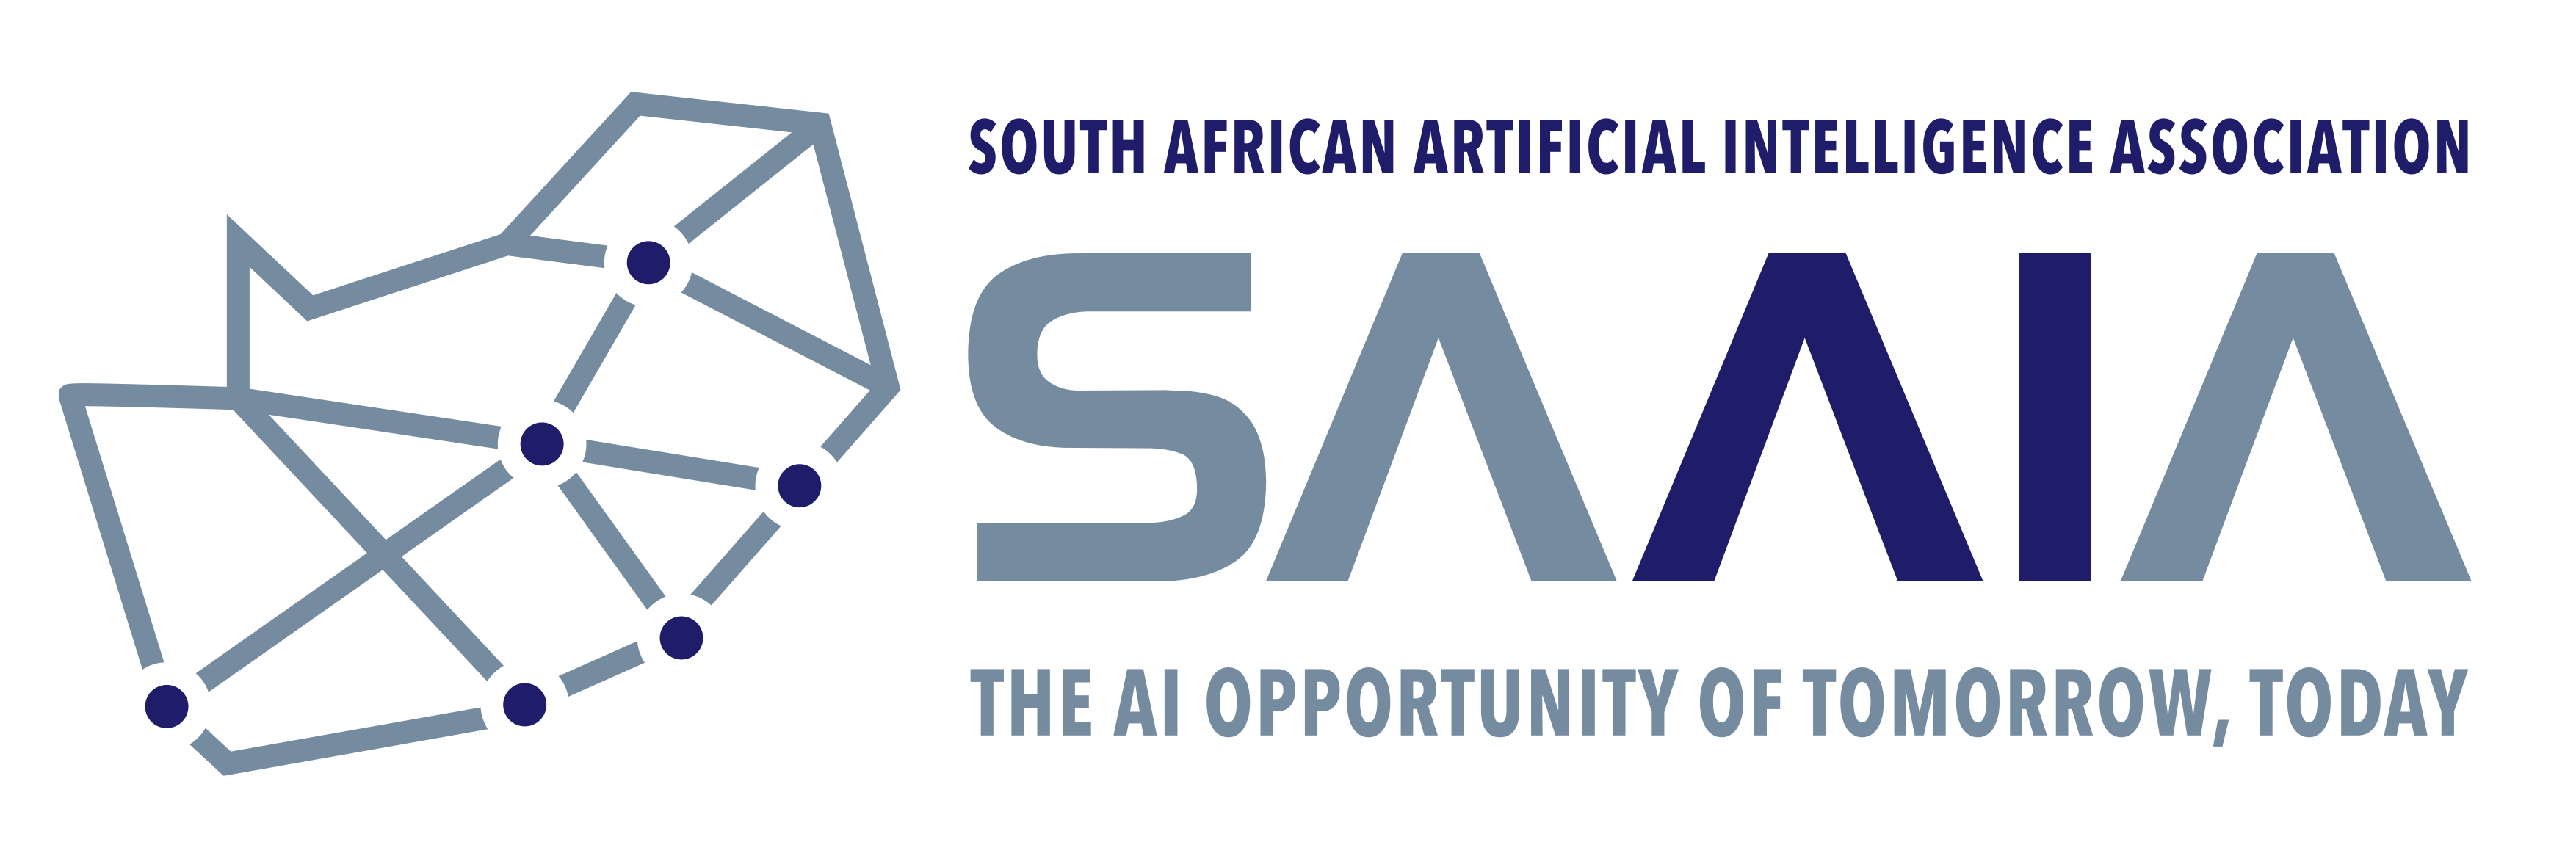 SA AI Association